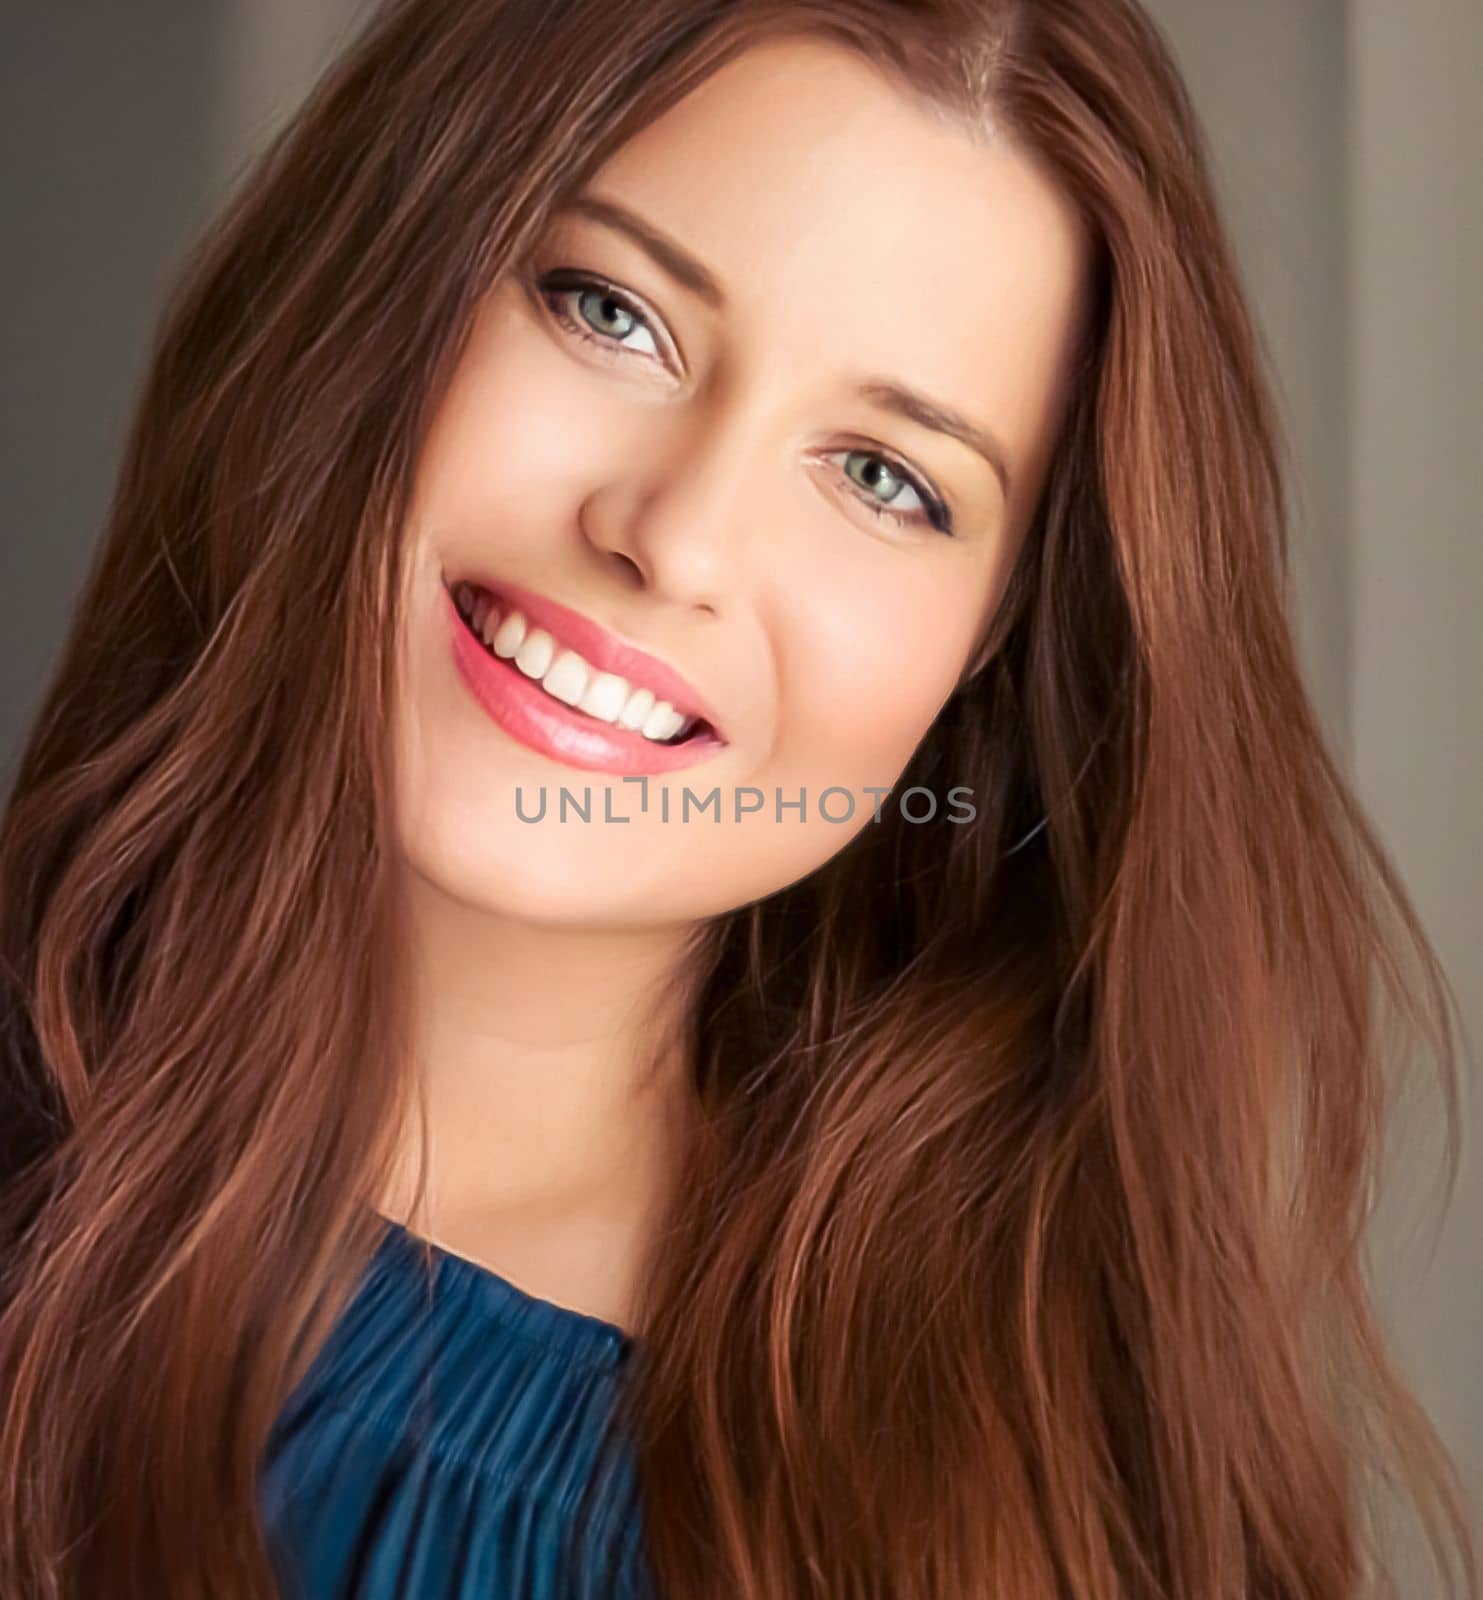 Beauty and femininity, beautiful woman smiling, natural portrait closeup